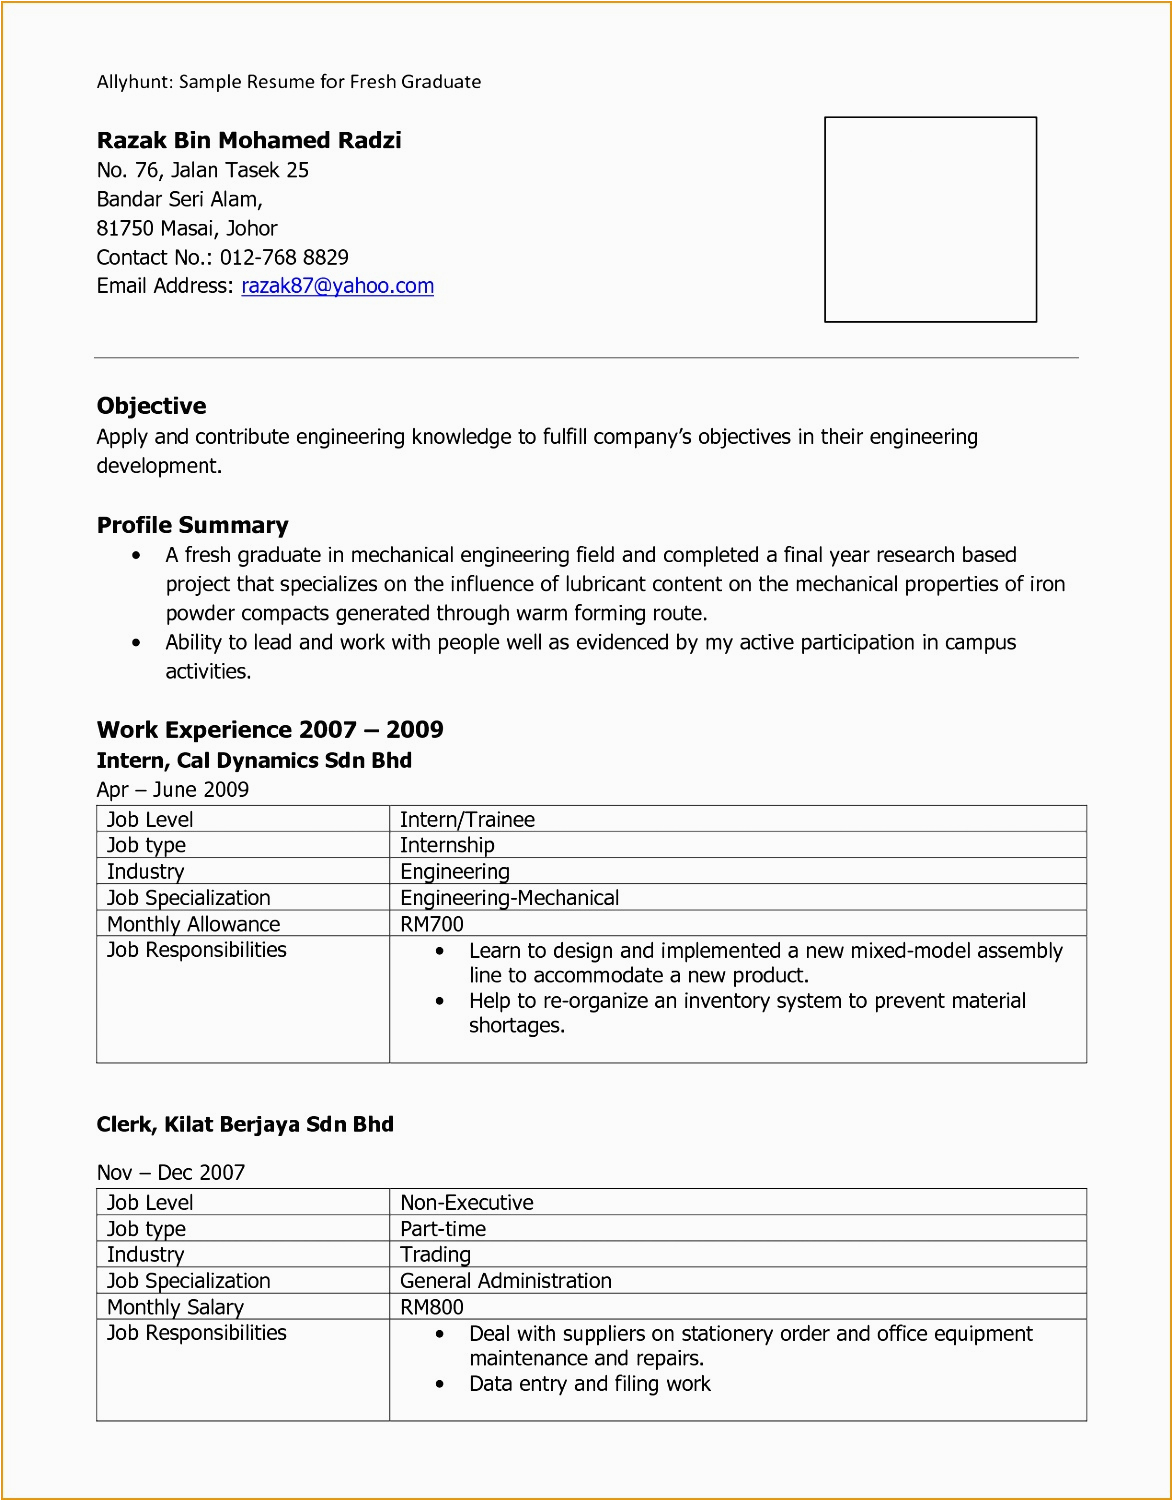 Functional Resume Sample for Fresh Graduate 9 Example Resume for Fresh Graduate